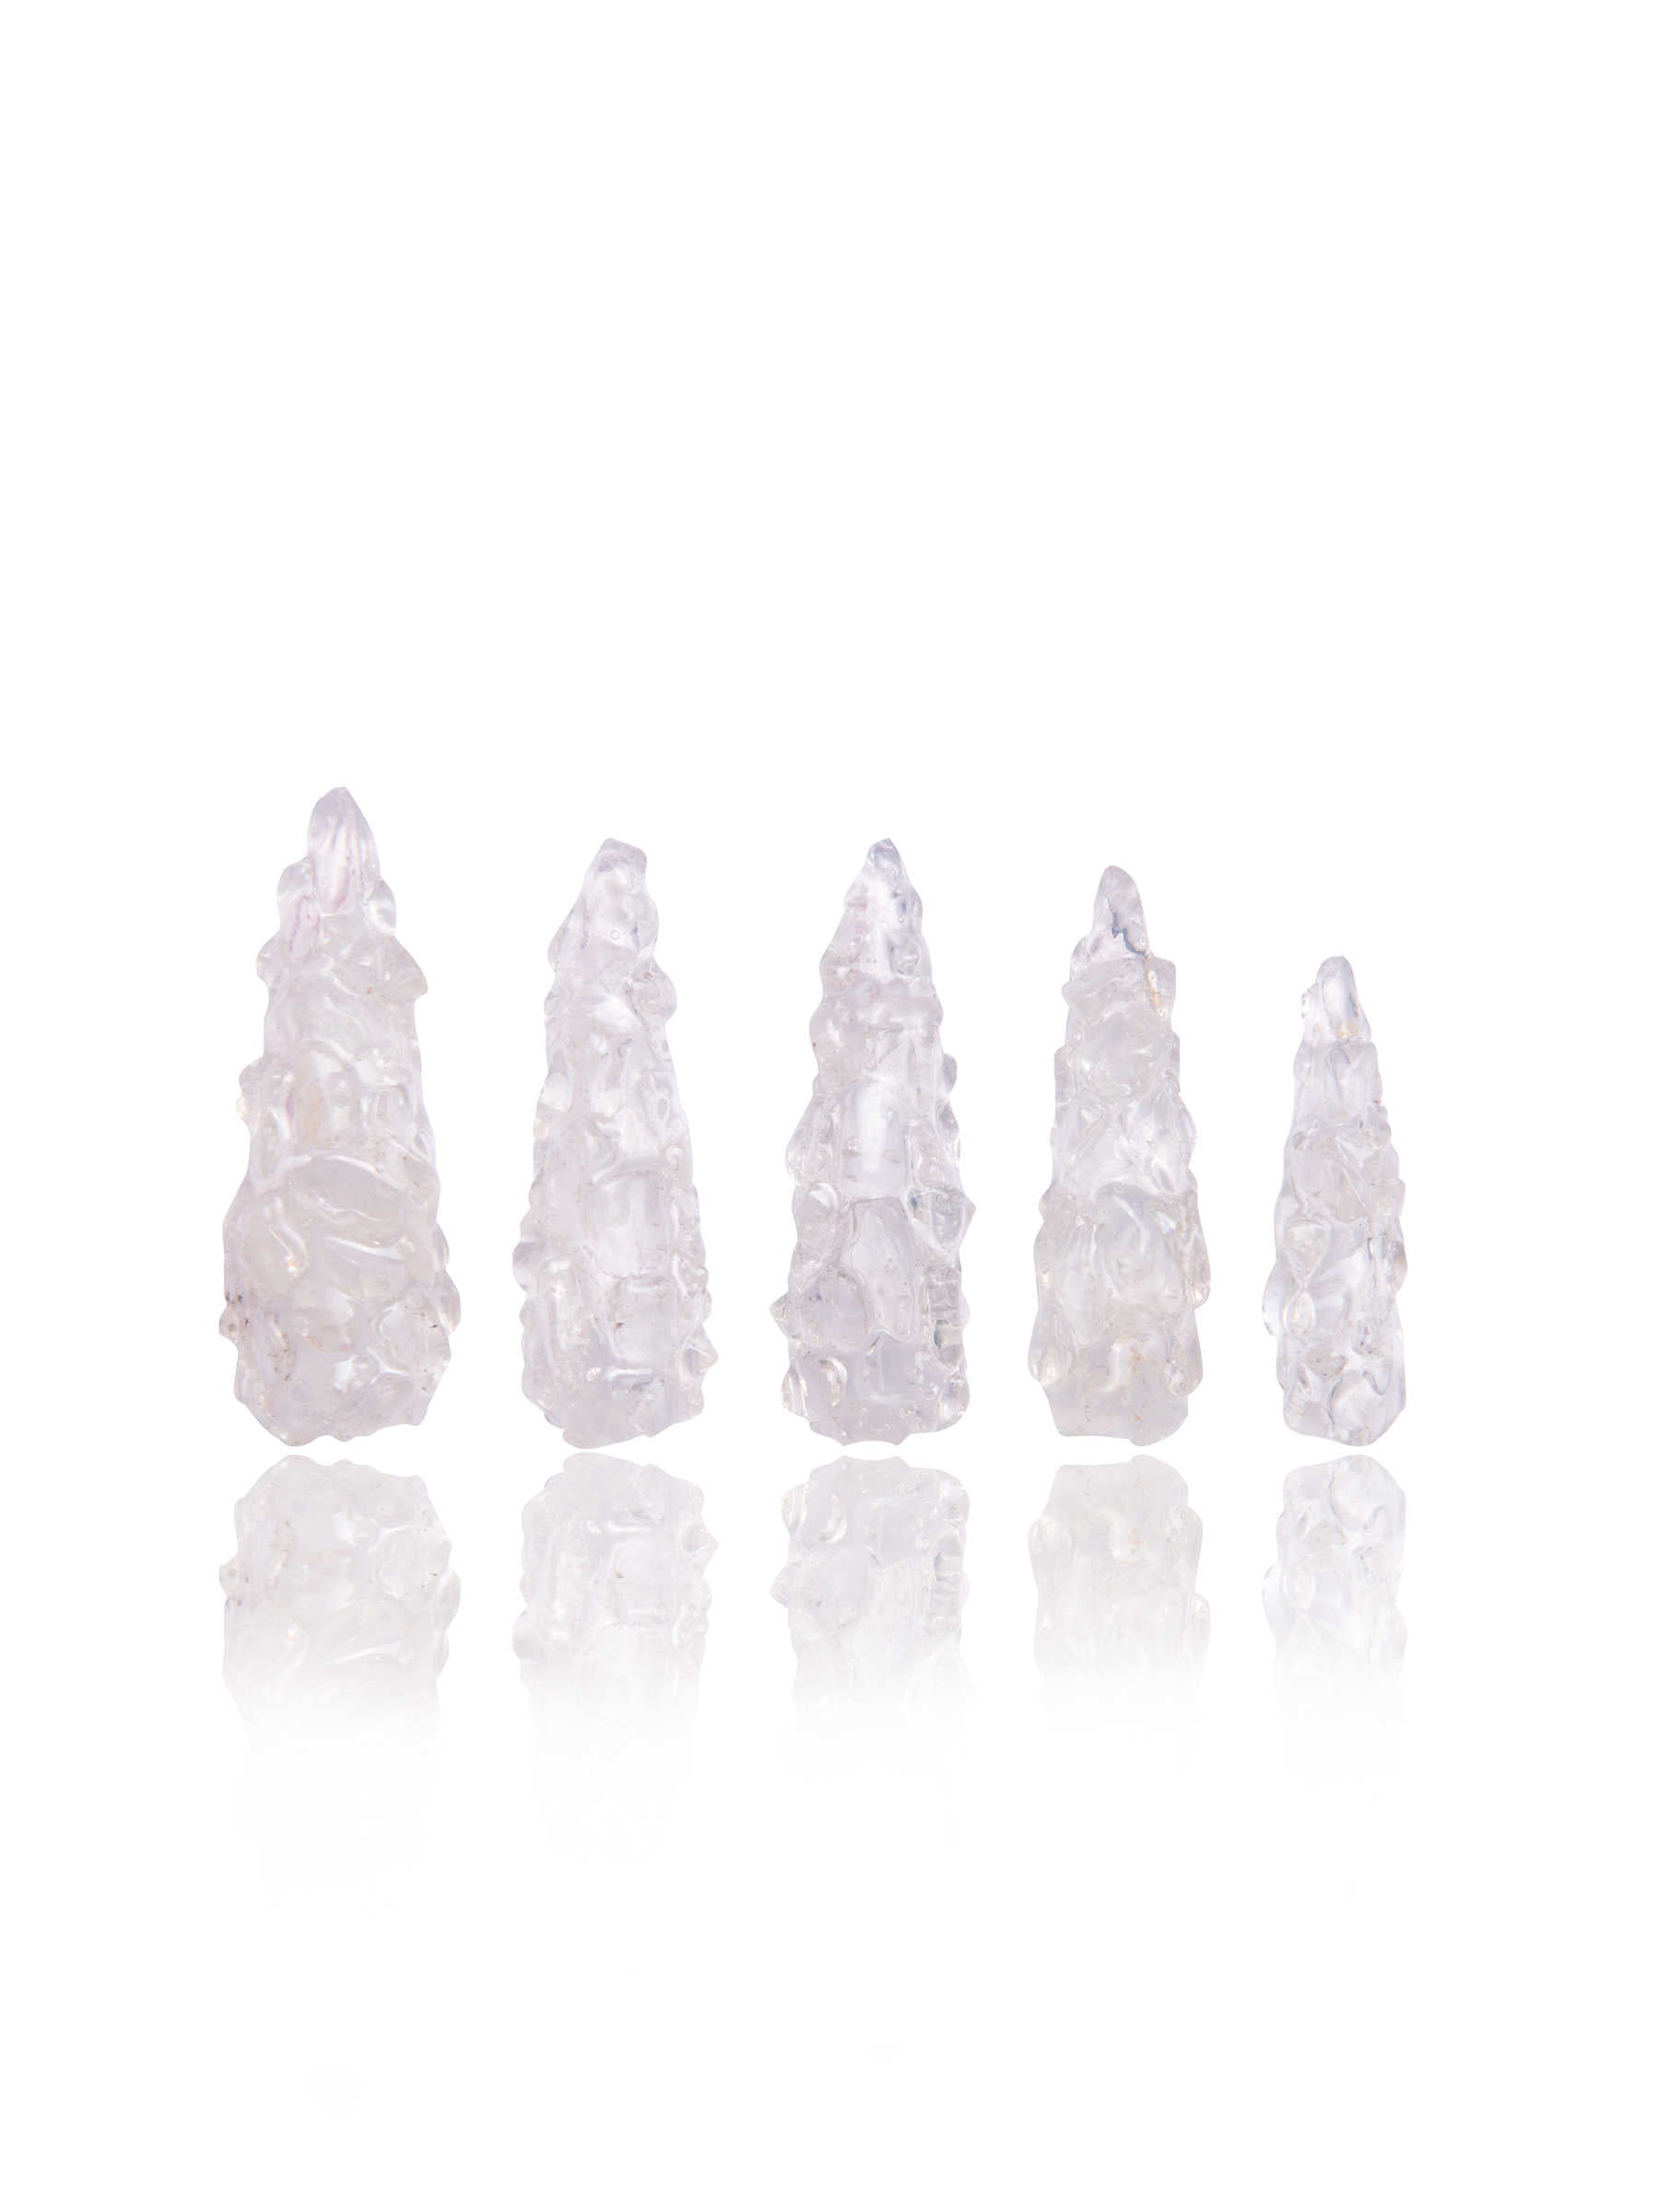 H179 - Clear Quartz Crystal